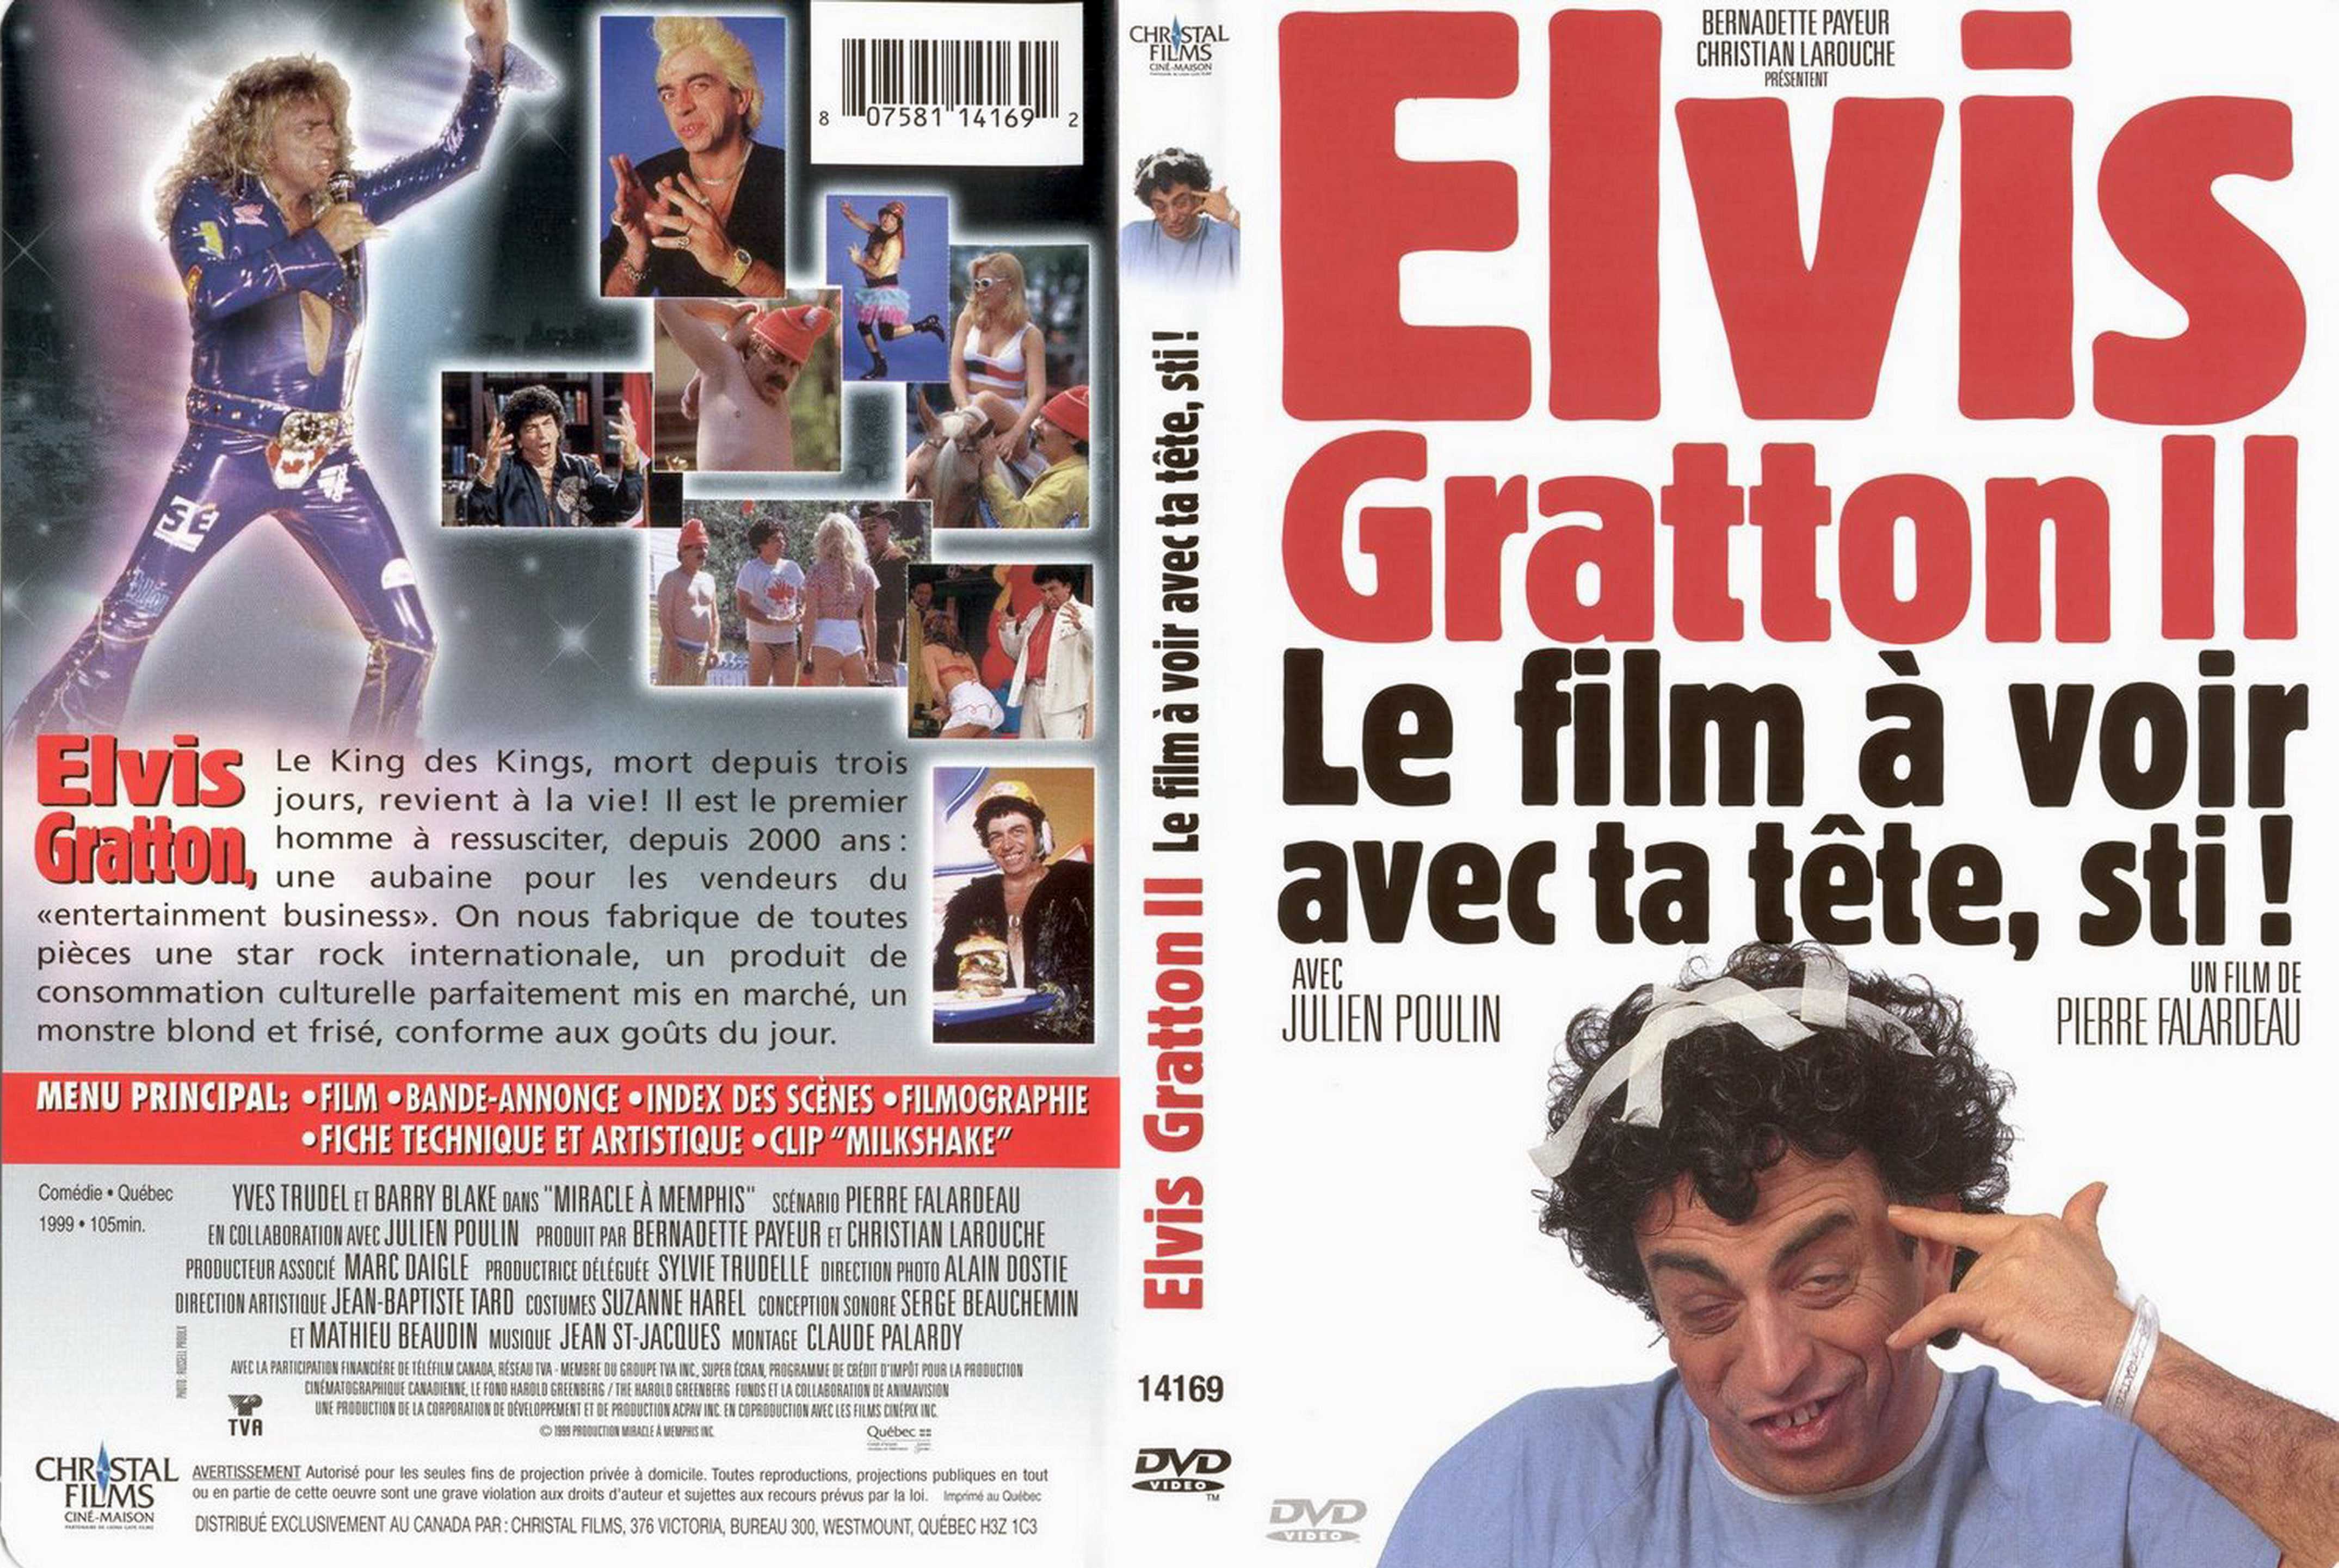 Jaquette DVD Elvis Gratton v2